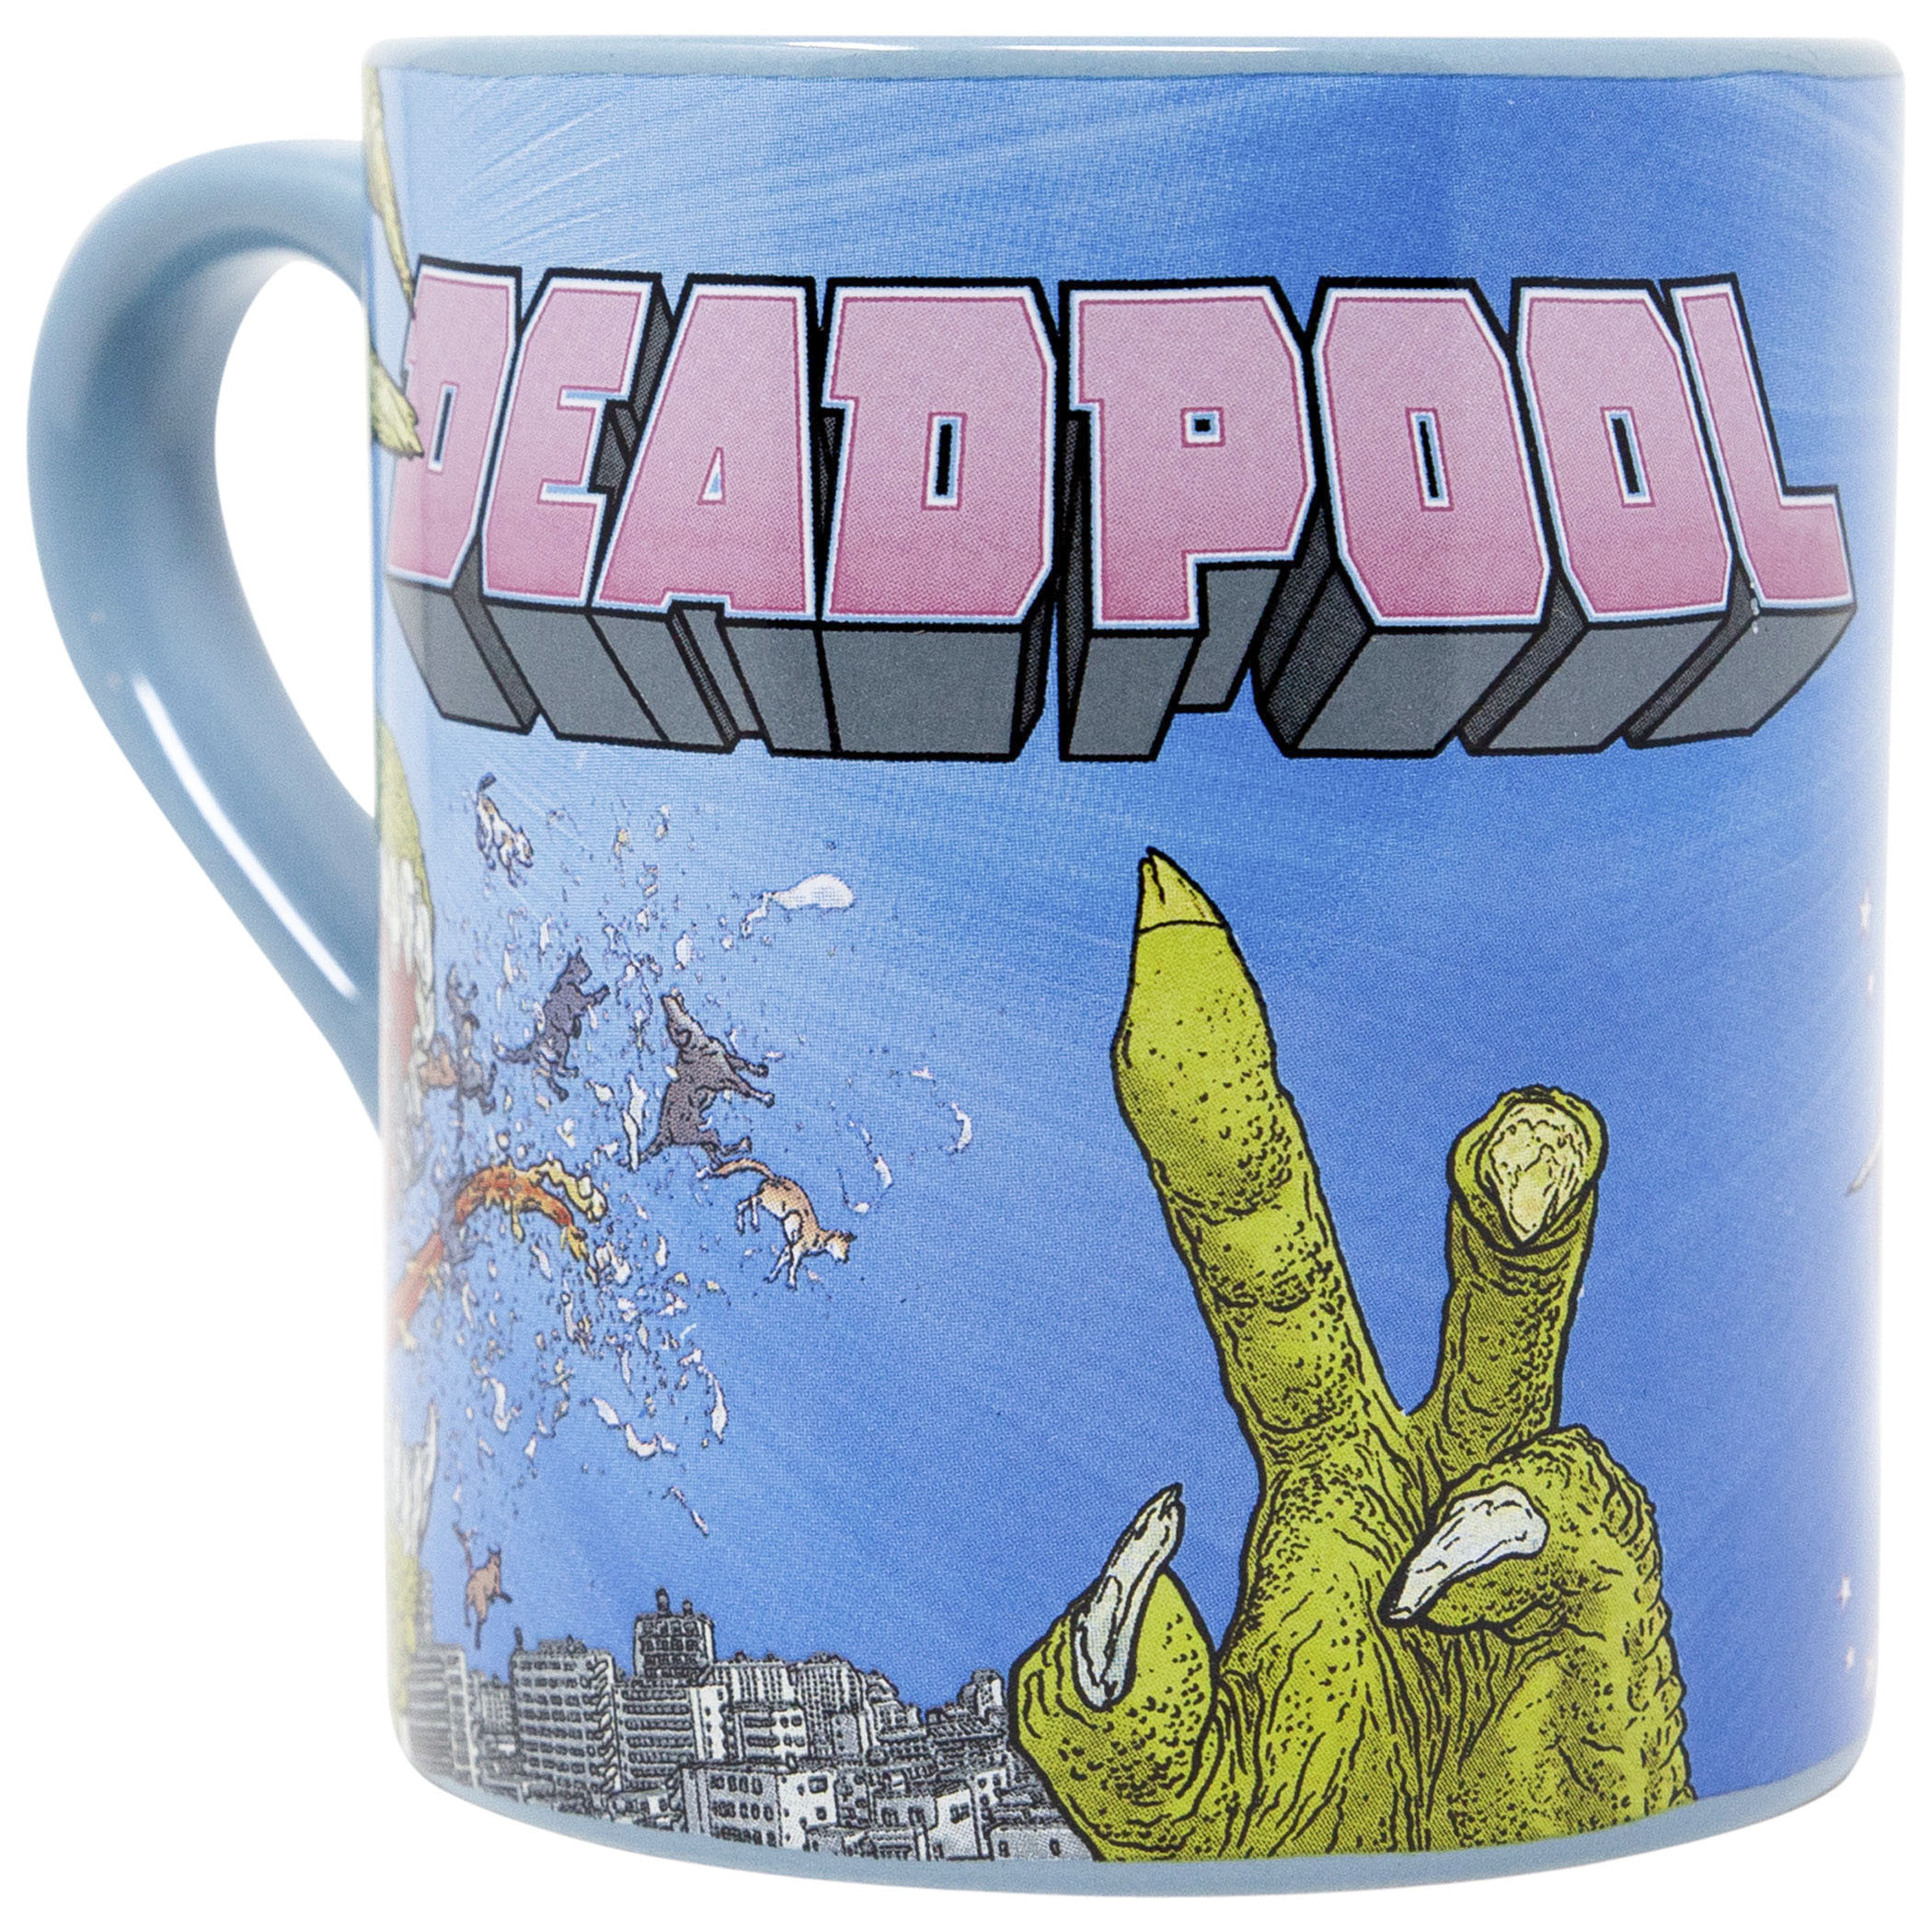 Deadpool Best Mug Ever! Unicorn-Styled 14 Ounce Ceramic Mug